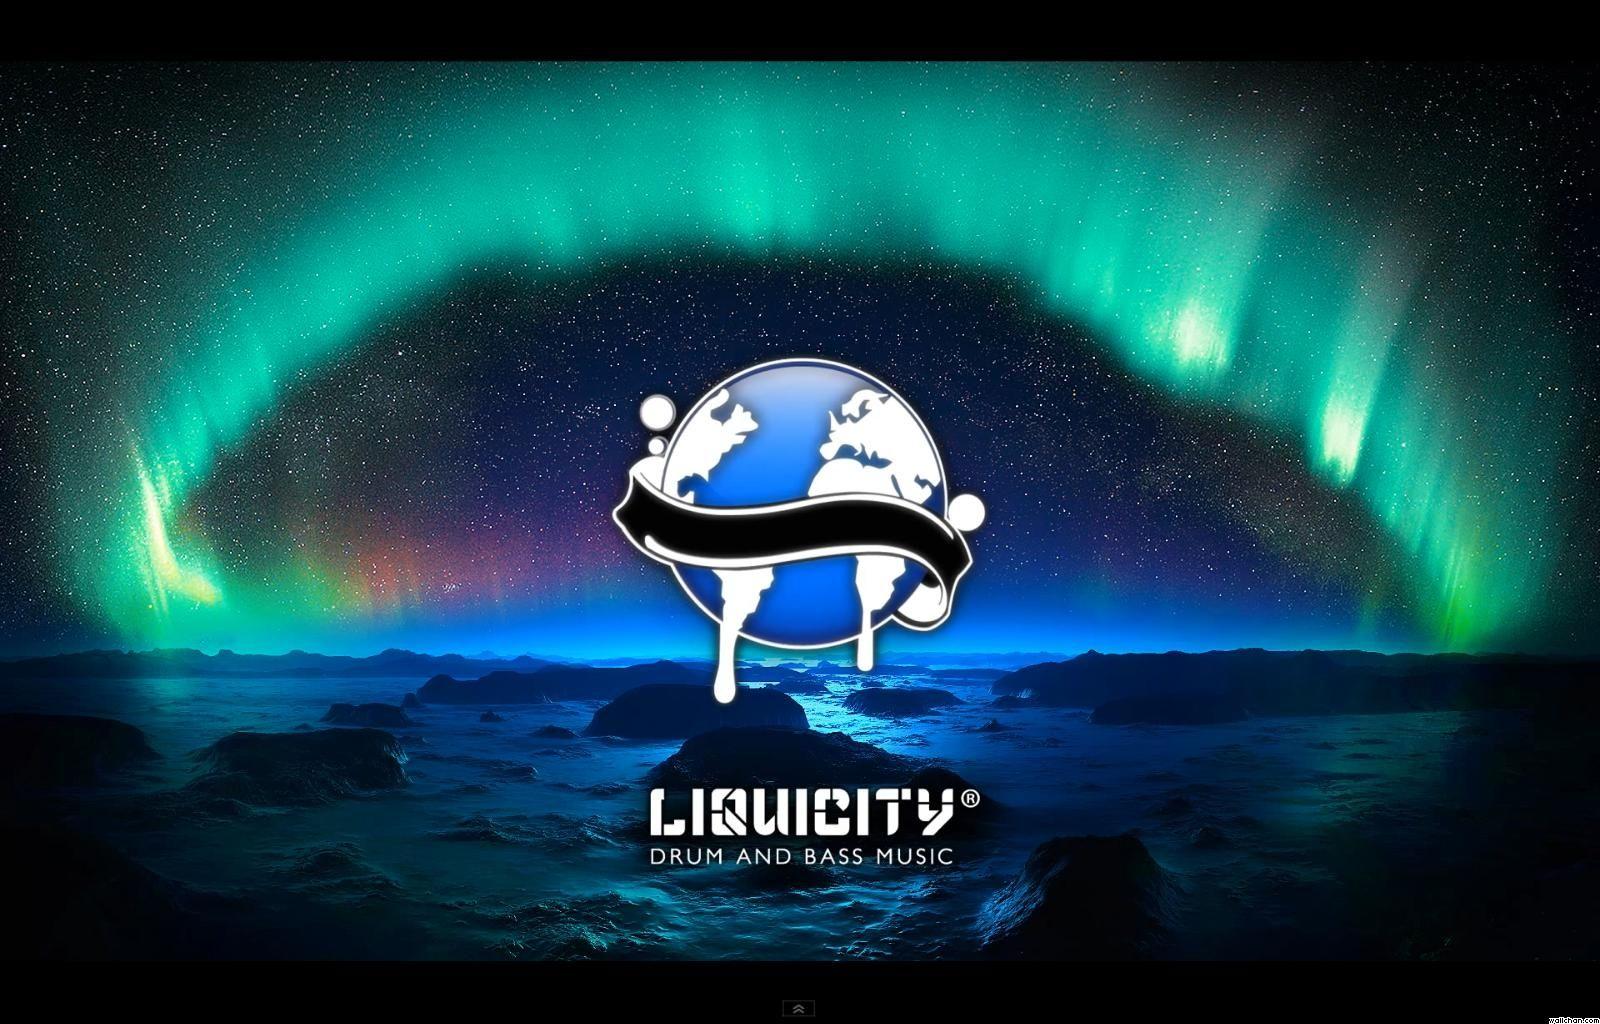 Liquicity. Dubstep I Like. Drums, Music, Bass